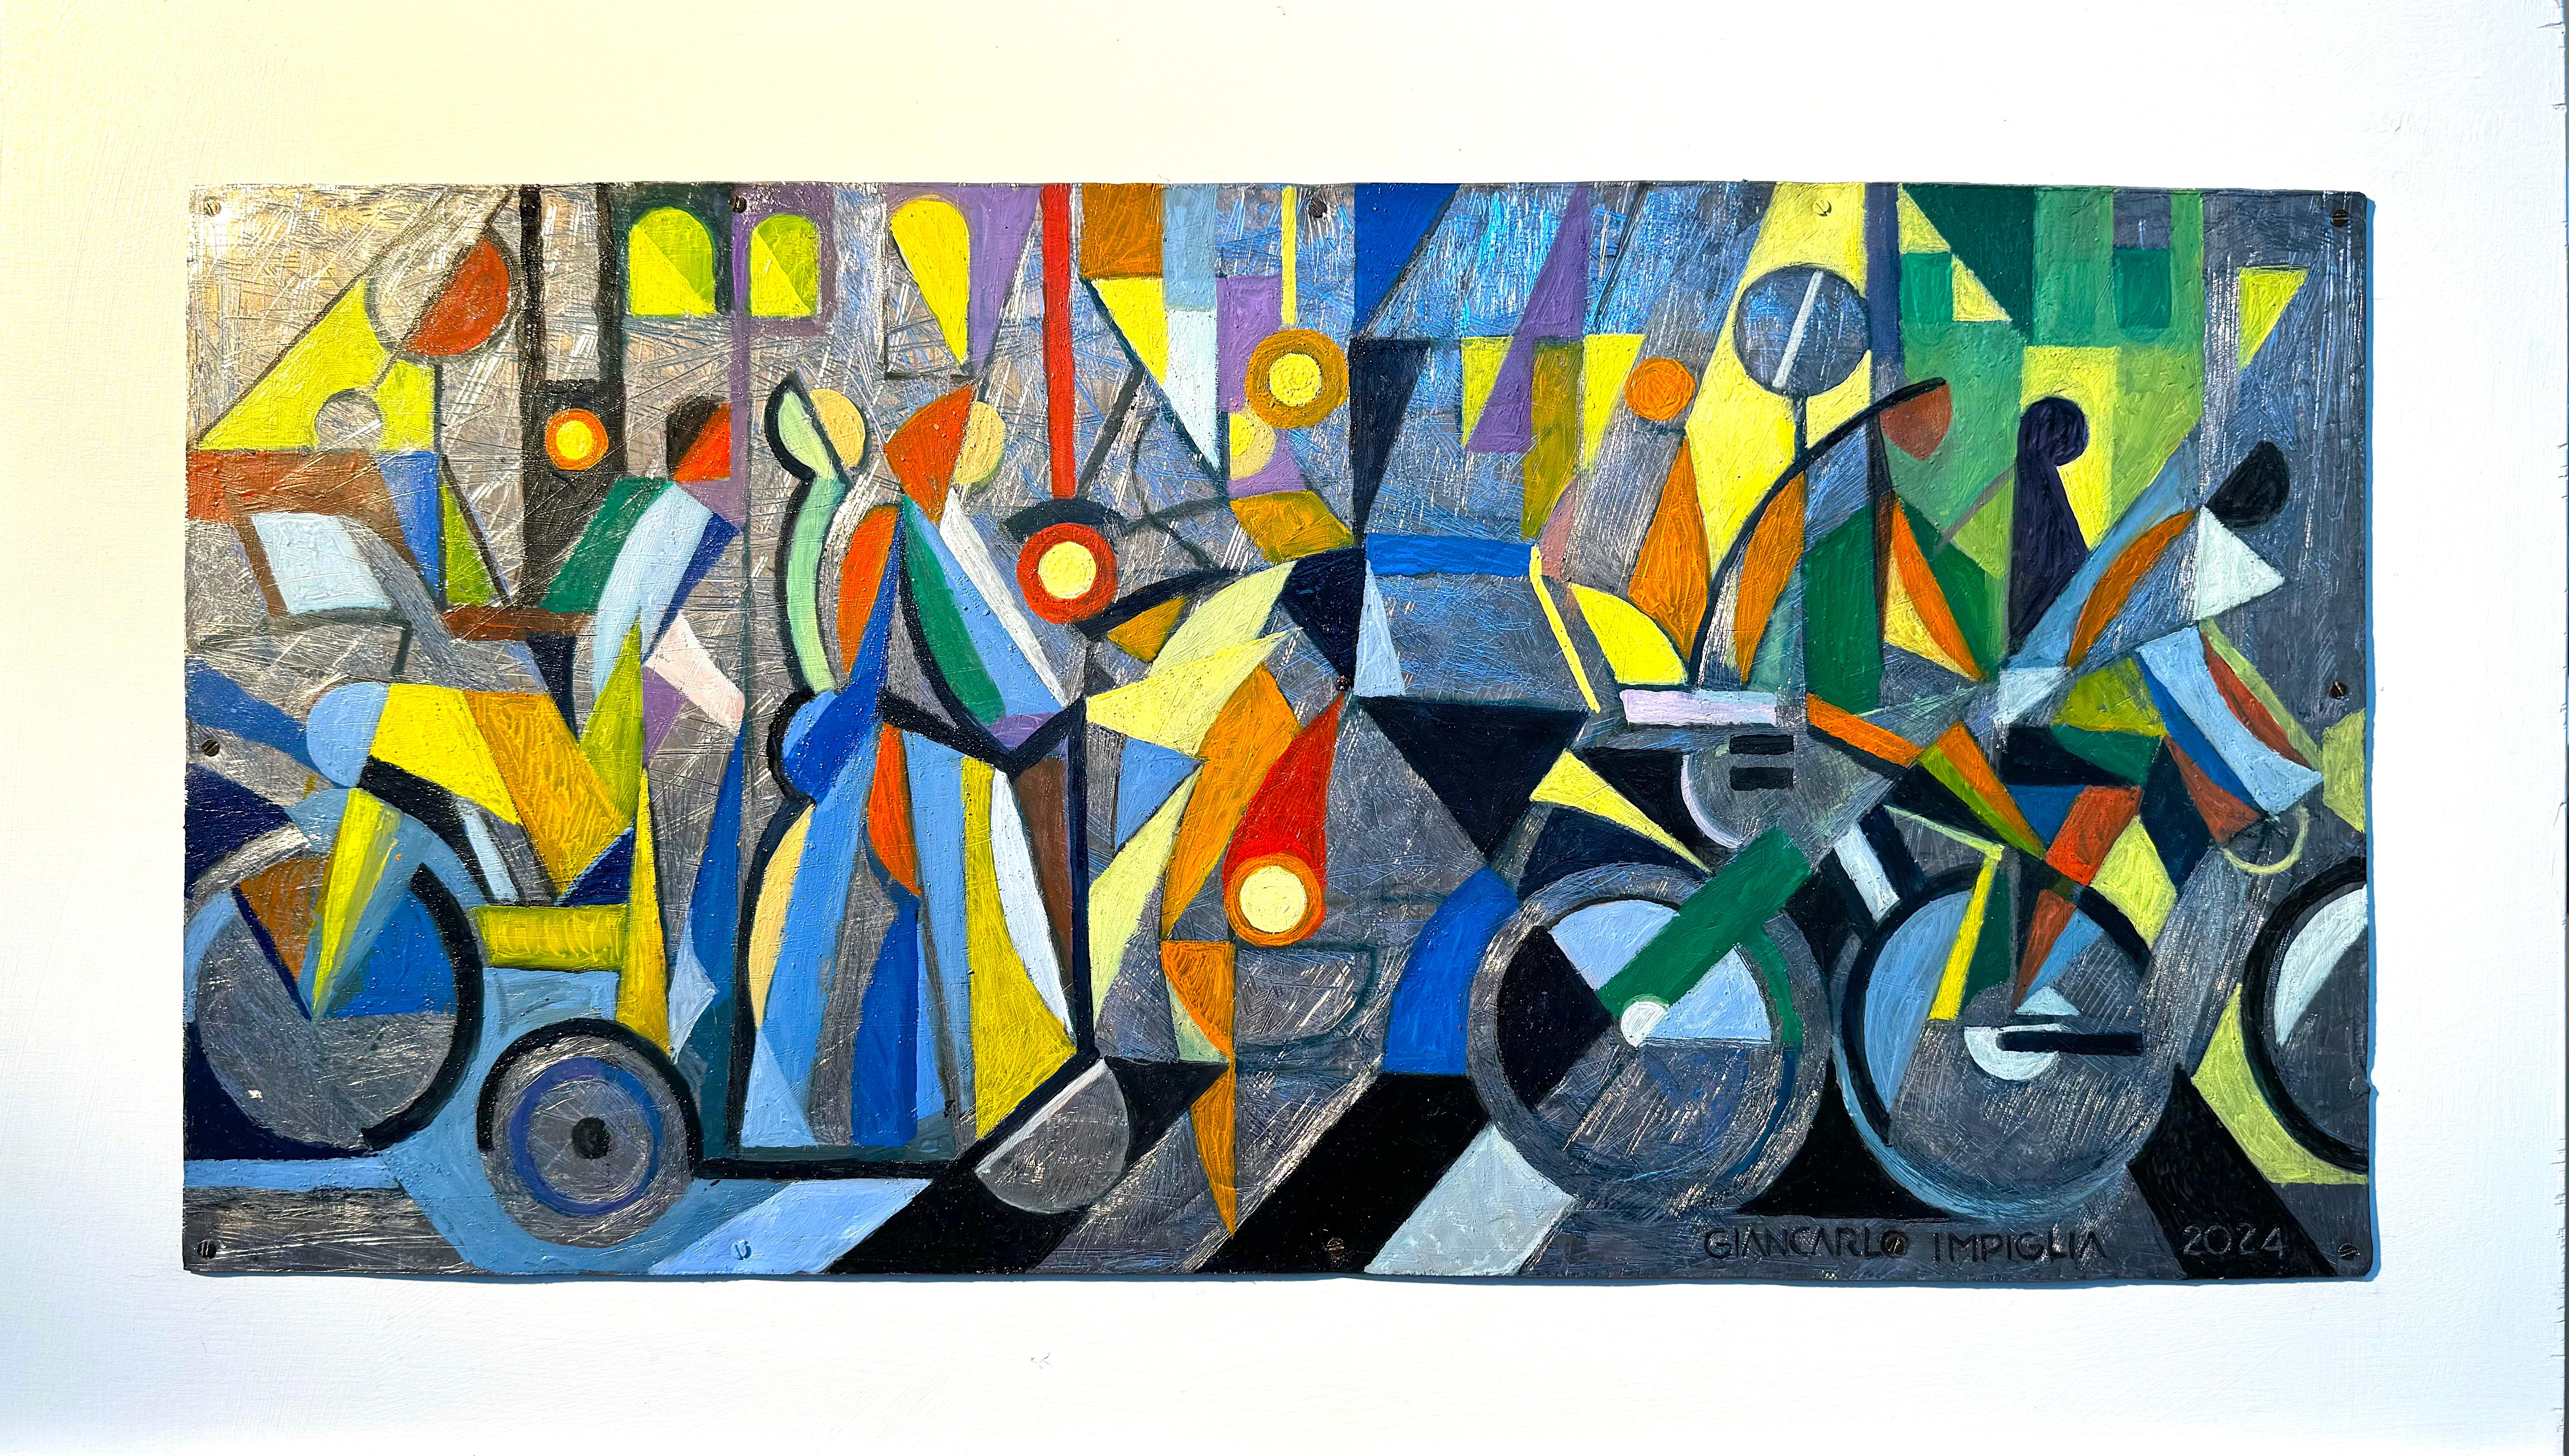 Cubist, futurist oil painting "Night Street" by Giancarlo Impiglia 